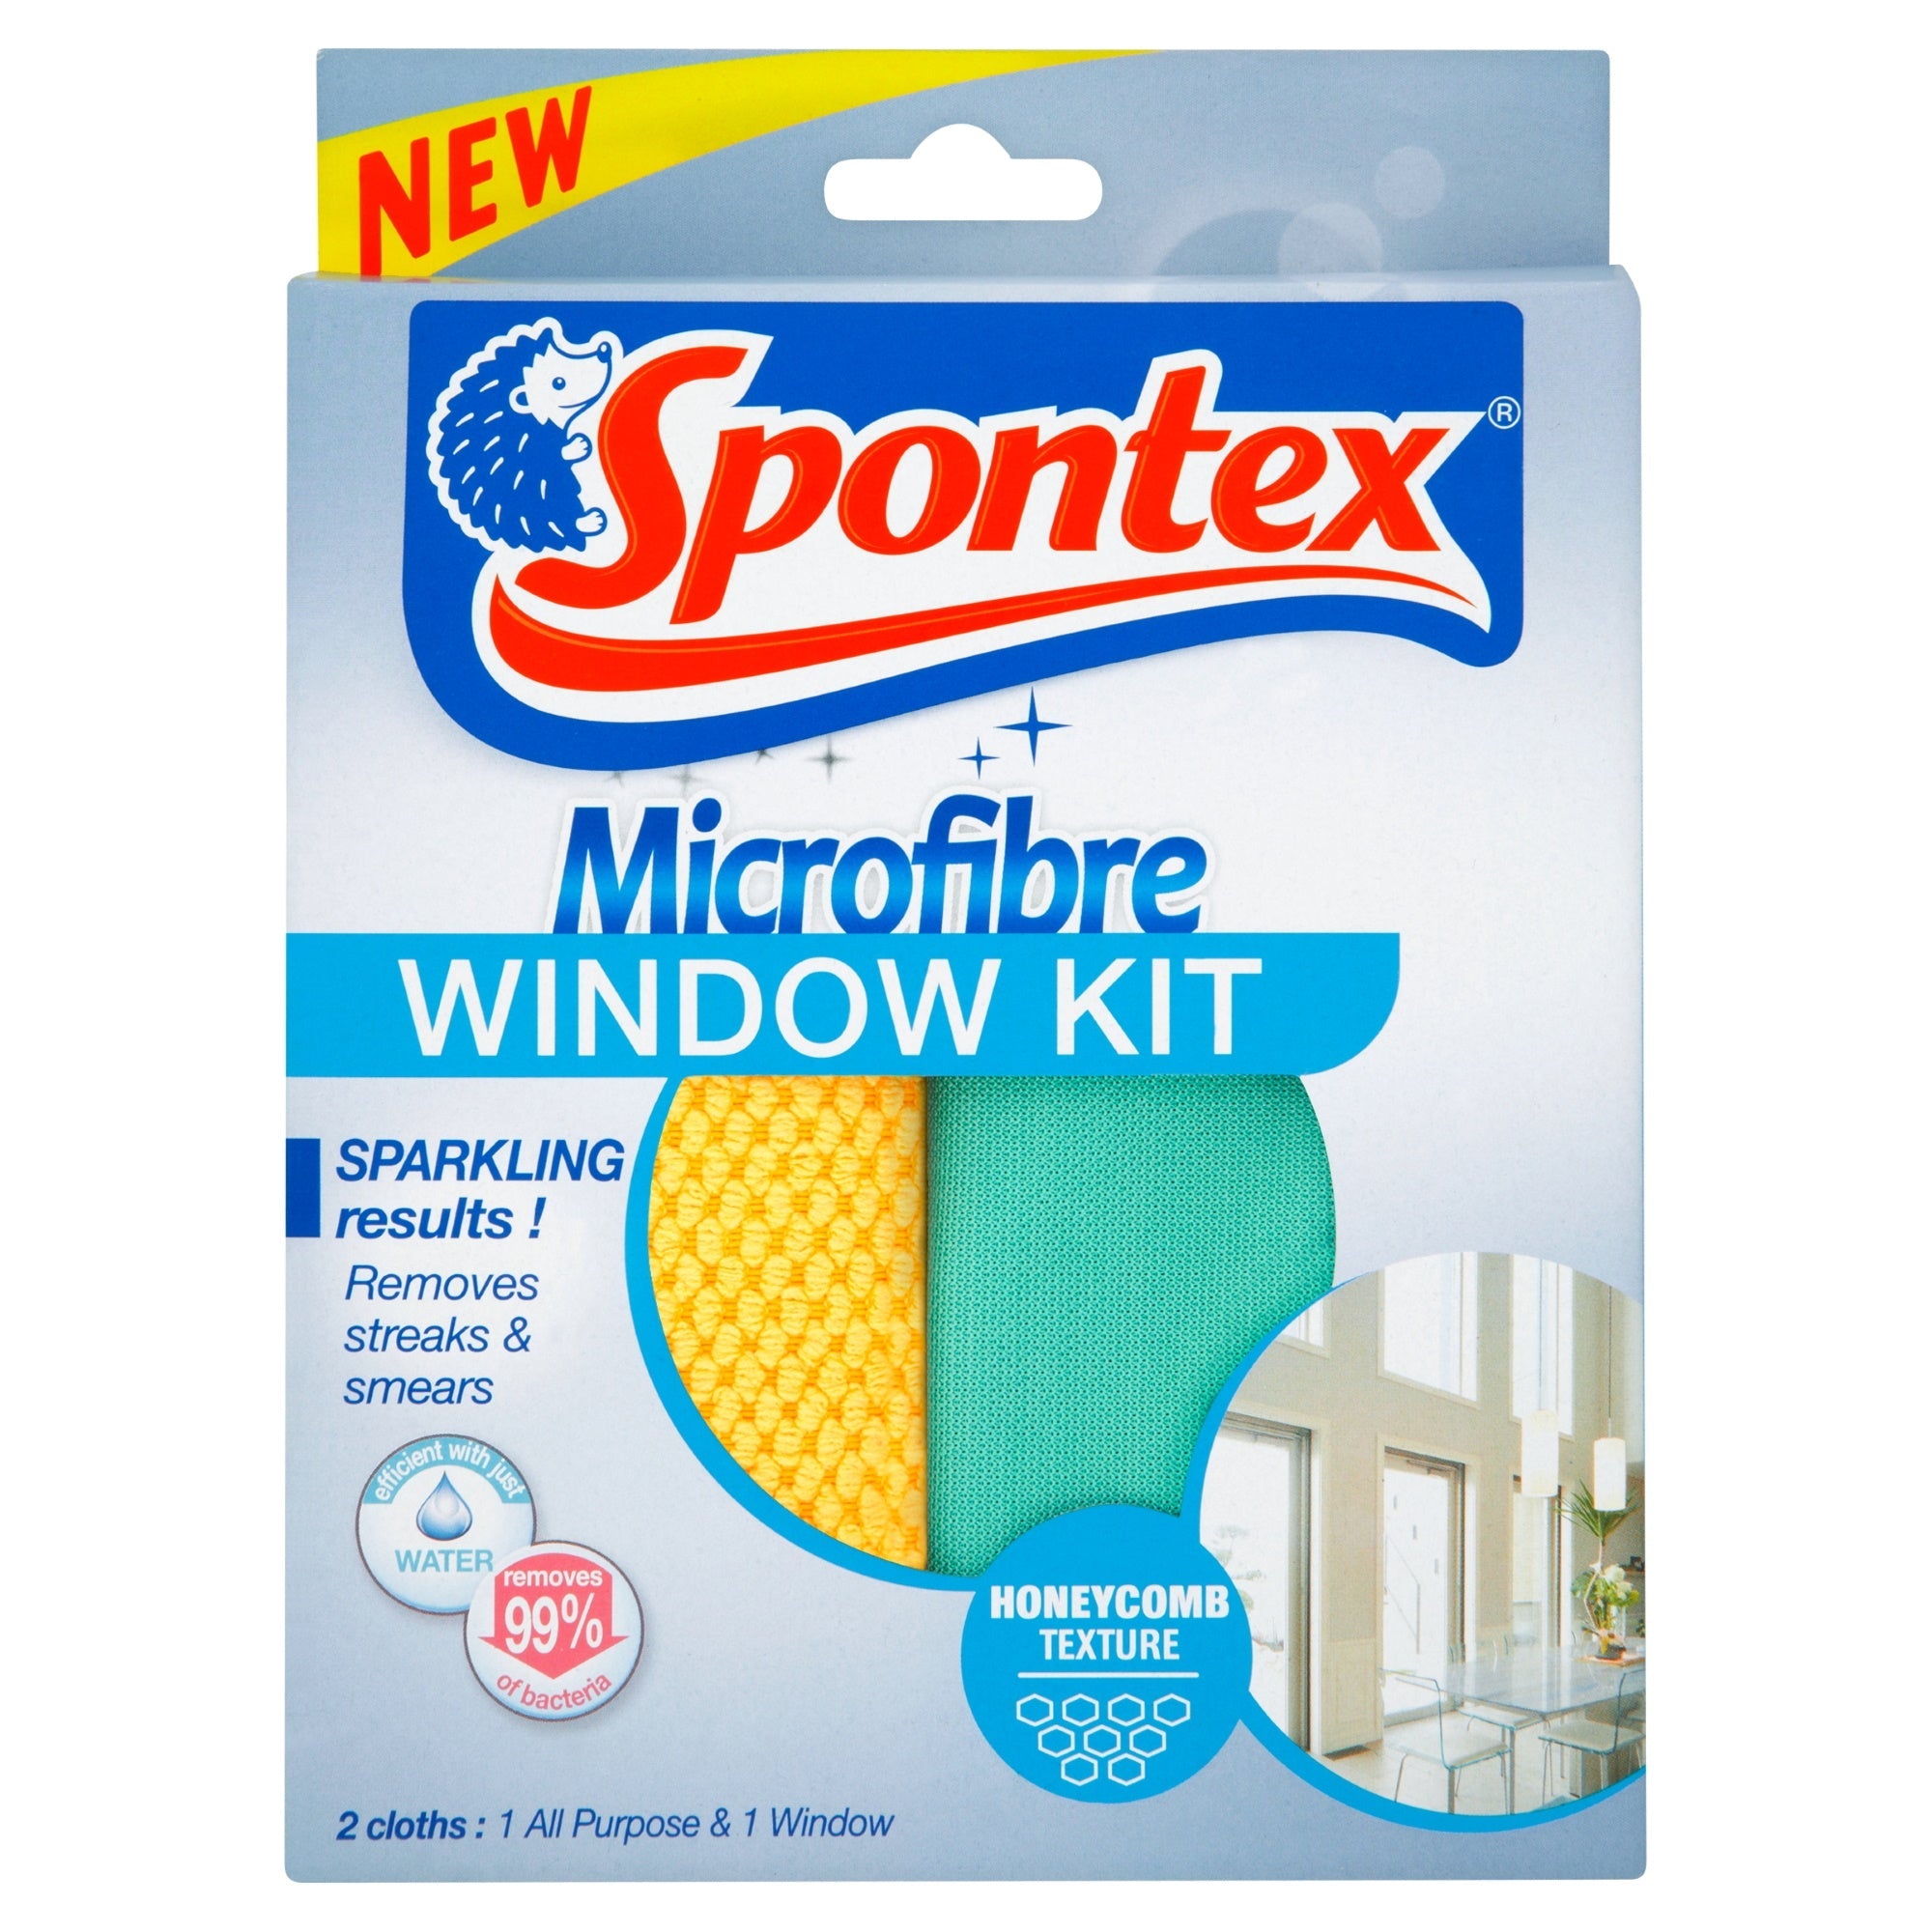 Spontex Microfibre Window Kit - Pack of 2 Cloths - Premium Window Cleaning from Spontex - Just $5.95! Shop now at W Hurst & Son (IW) Ltd